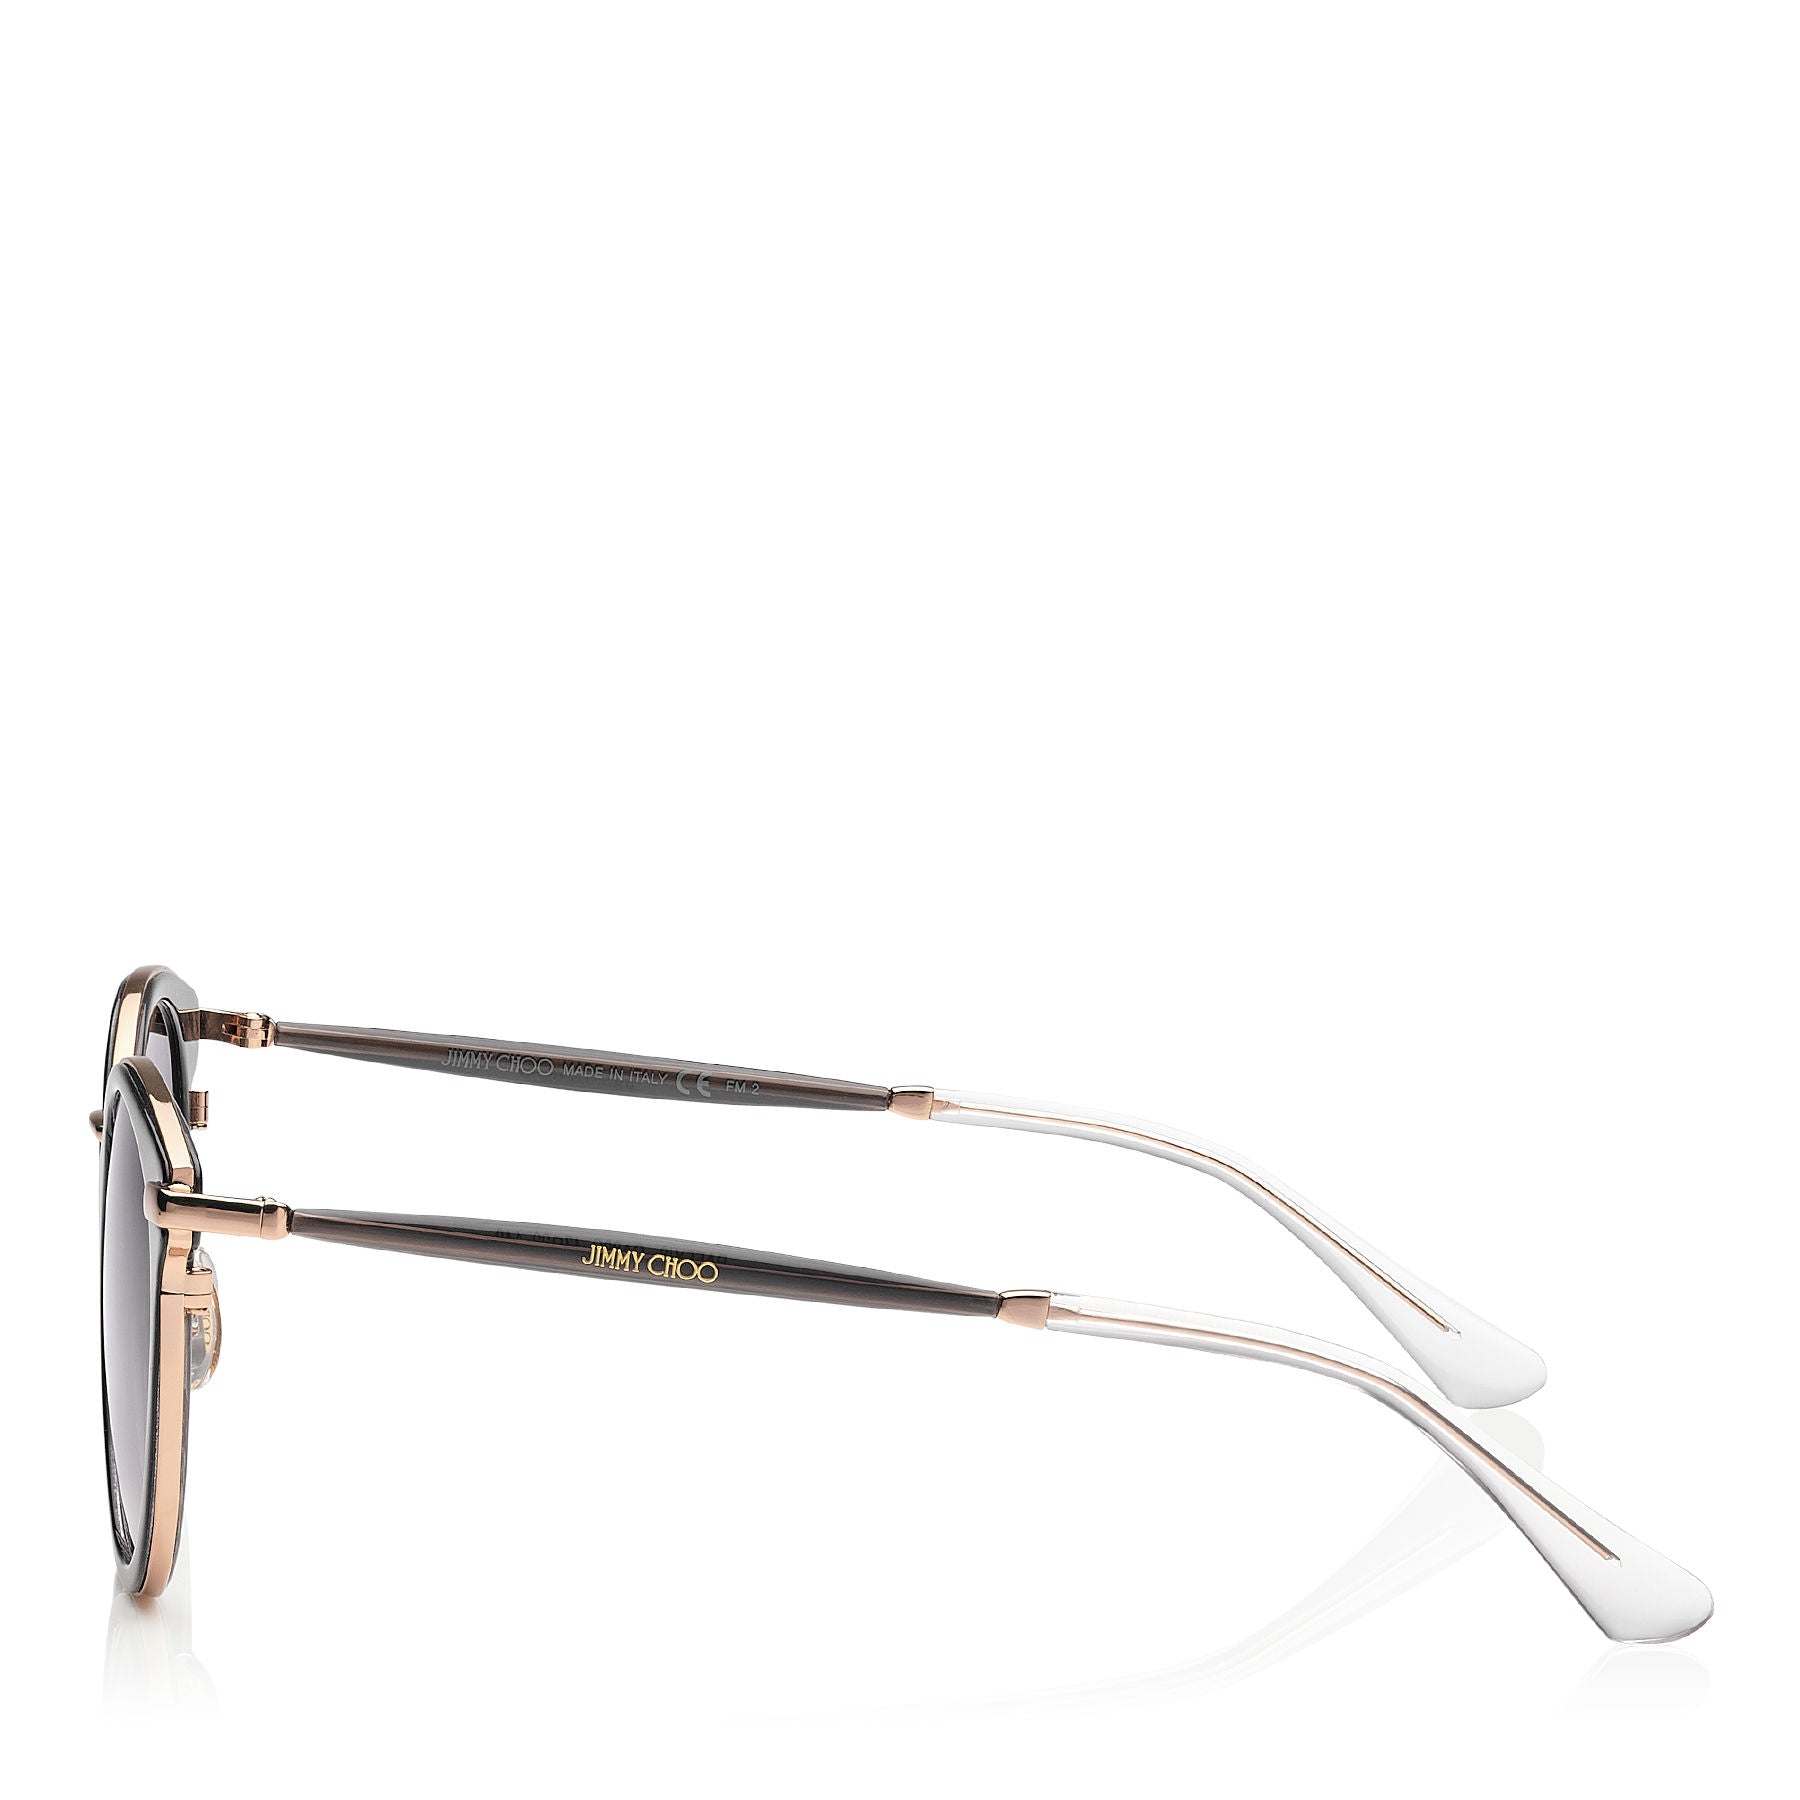 JIMMY CHOO Raffy Grey Glitter and Metal Round Framed Sunglasses ITEM NO. RAFFYS47EQA8